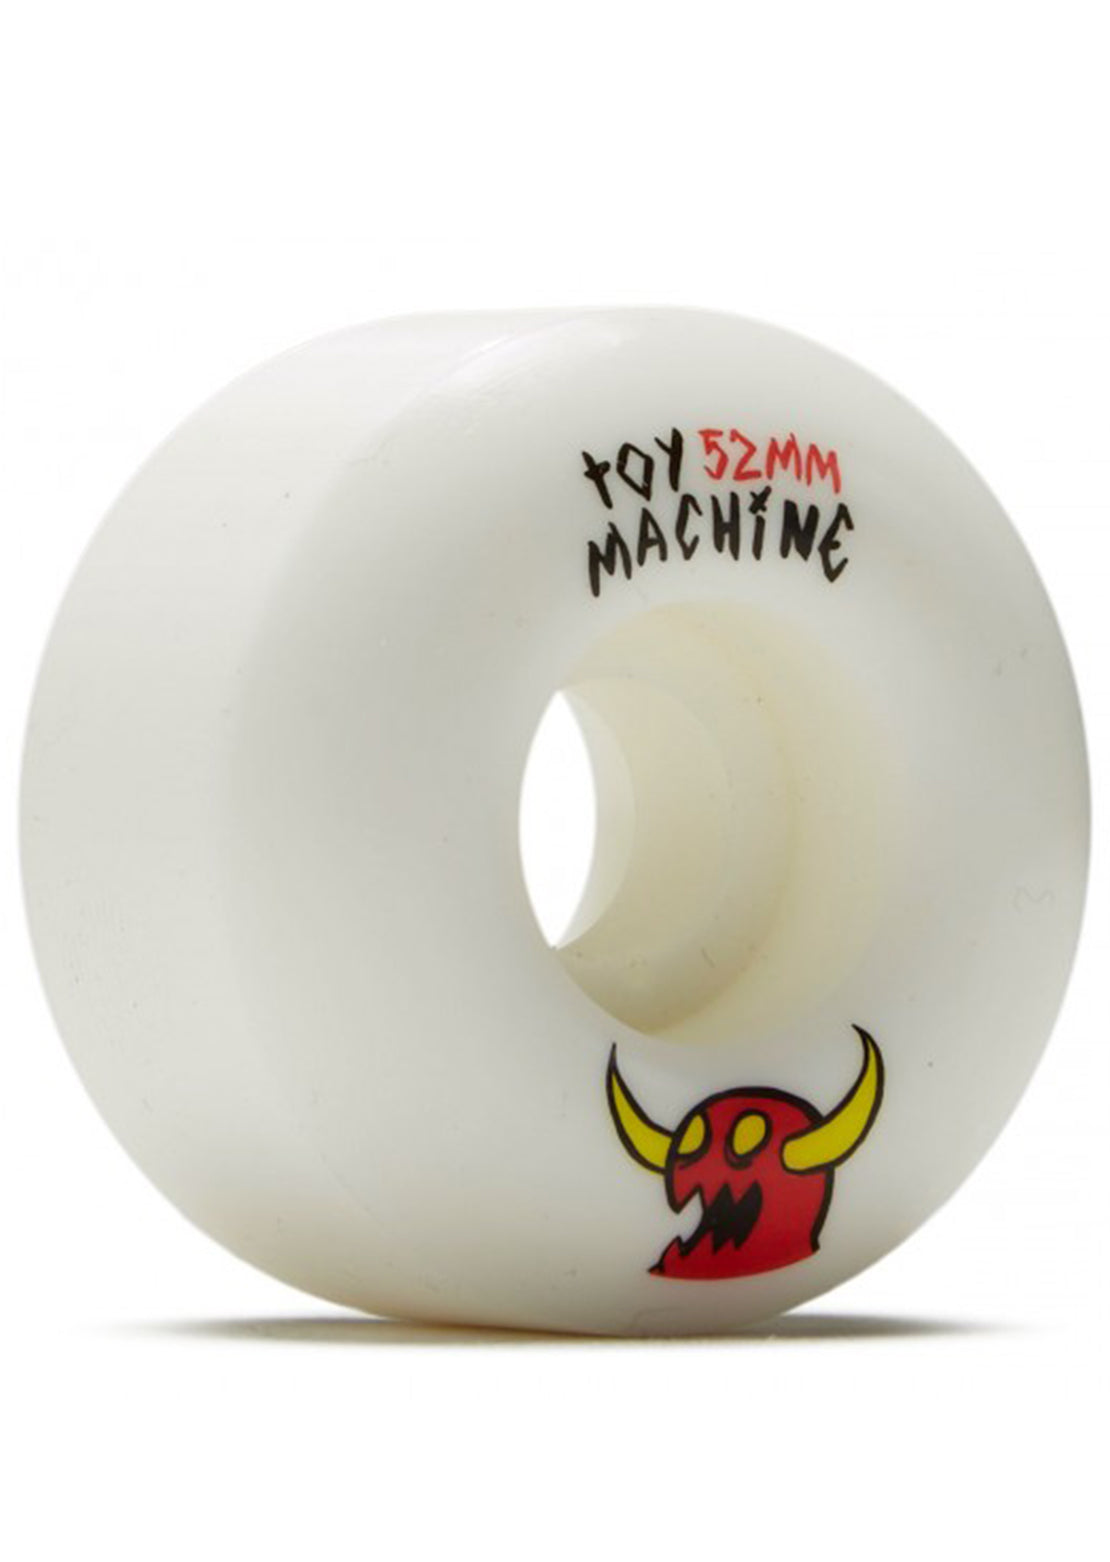 Toy Machine Sketchy Monster Skateboard Wheels - 52mm